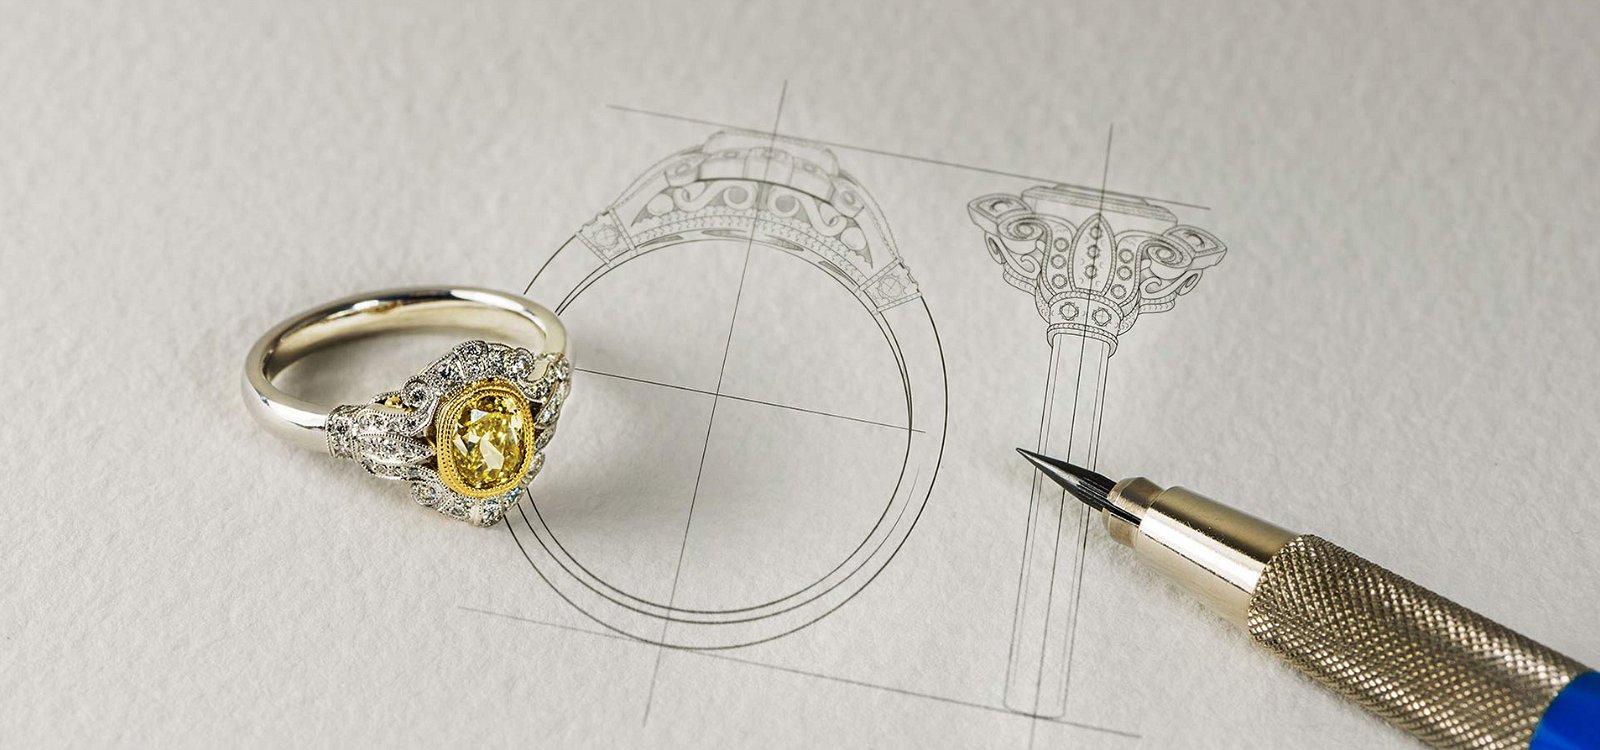 How Do Jewelers Make Custom Jewelry